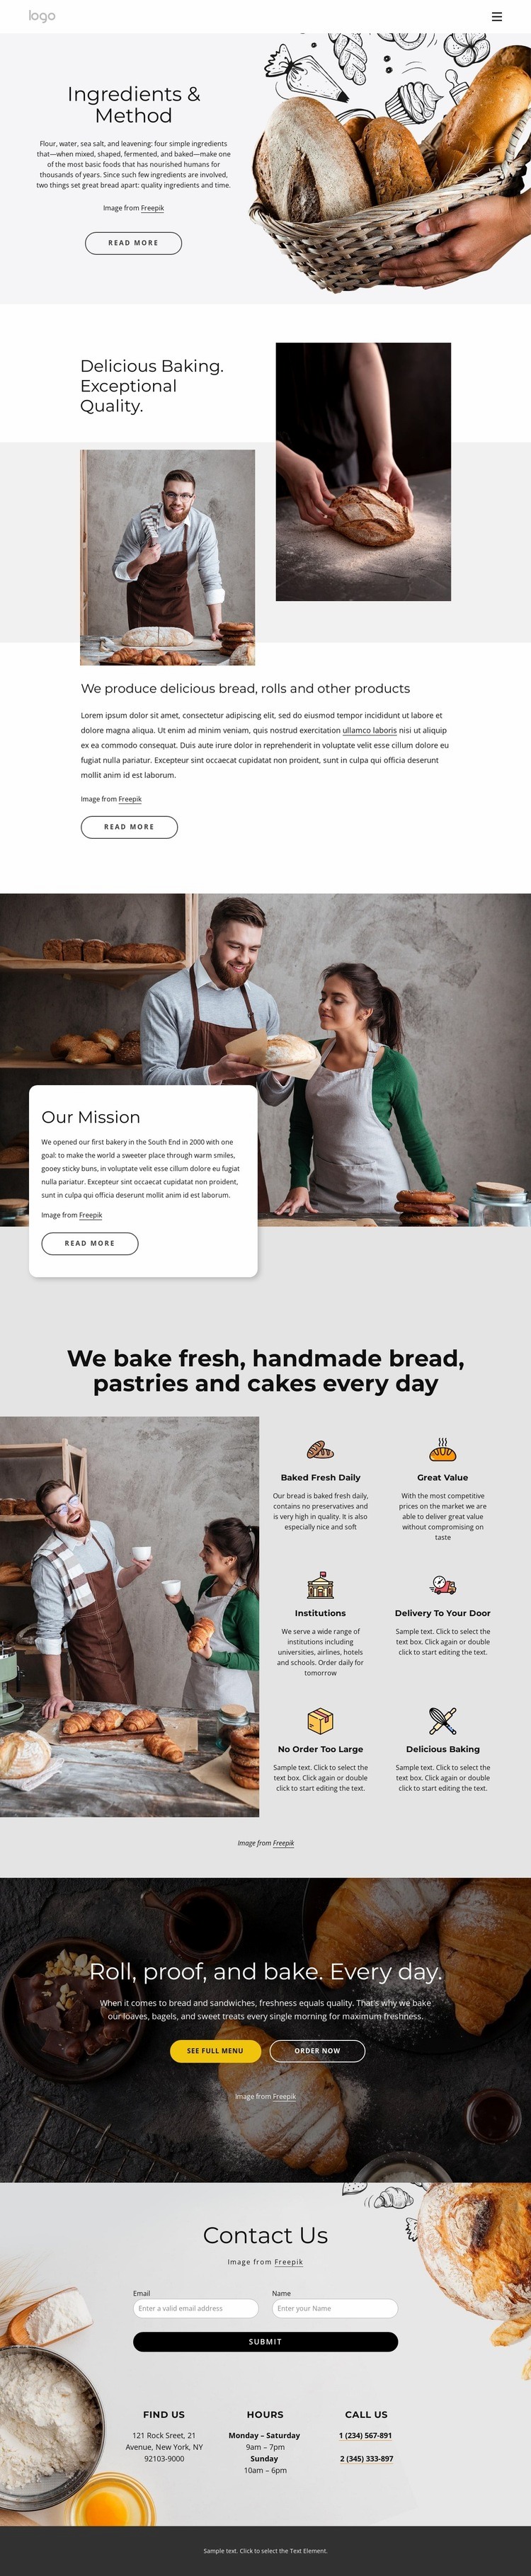 We bake handmade bread Squarespace Template Alternative